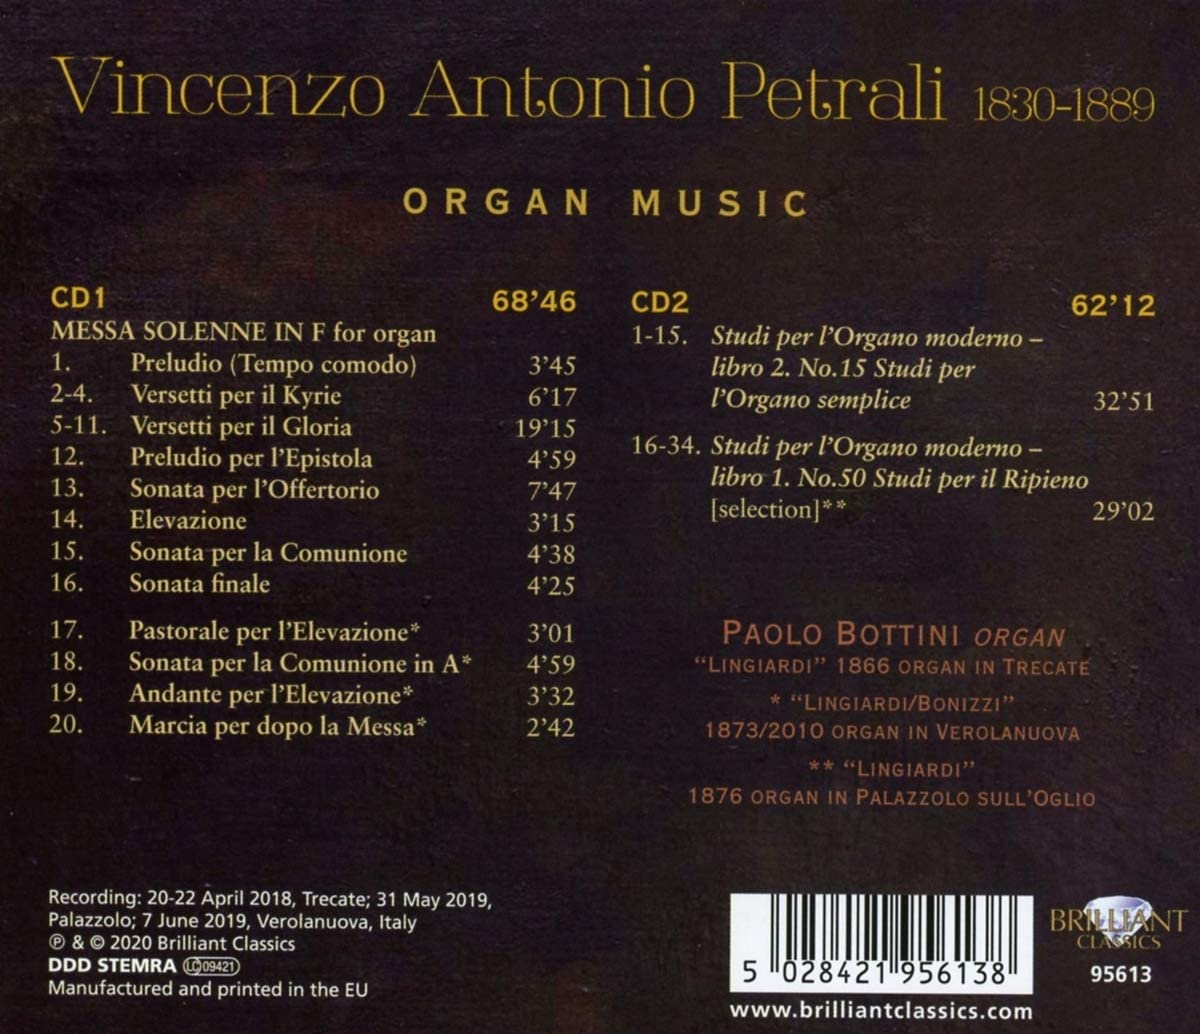 Paolo Bottini 페트랄리: 장엄 미사, 오르간 연습곡 (Vincenzo Antonio Petrali: Organ Music) 